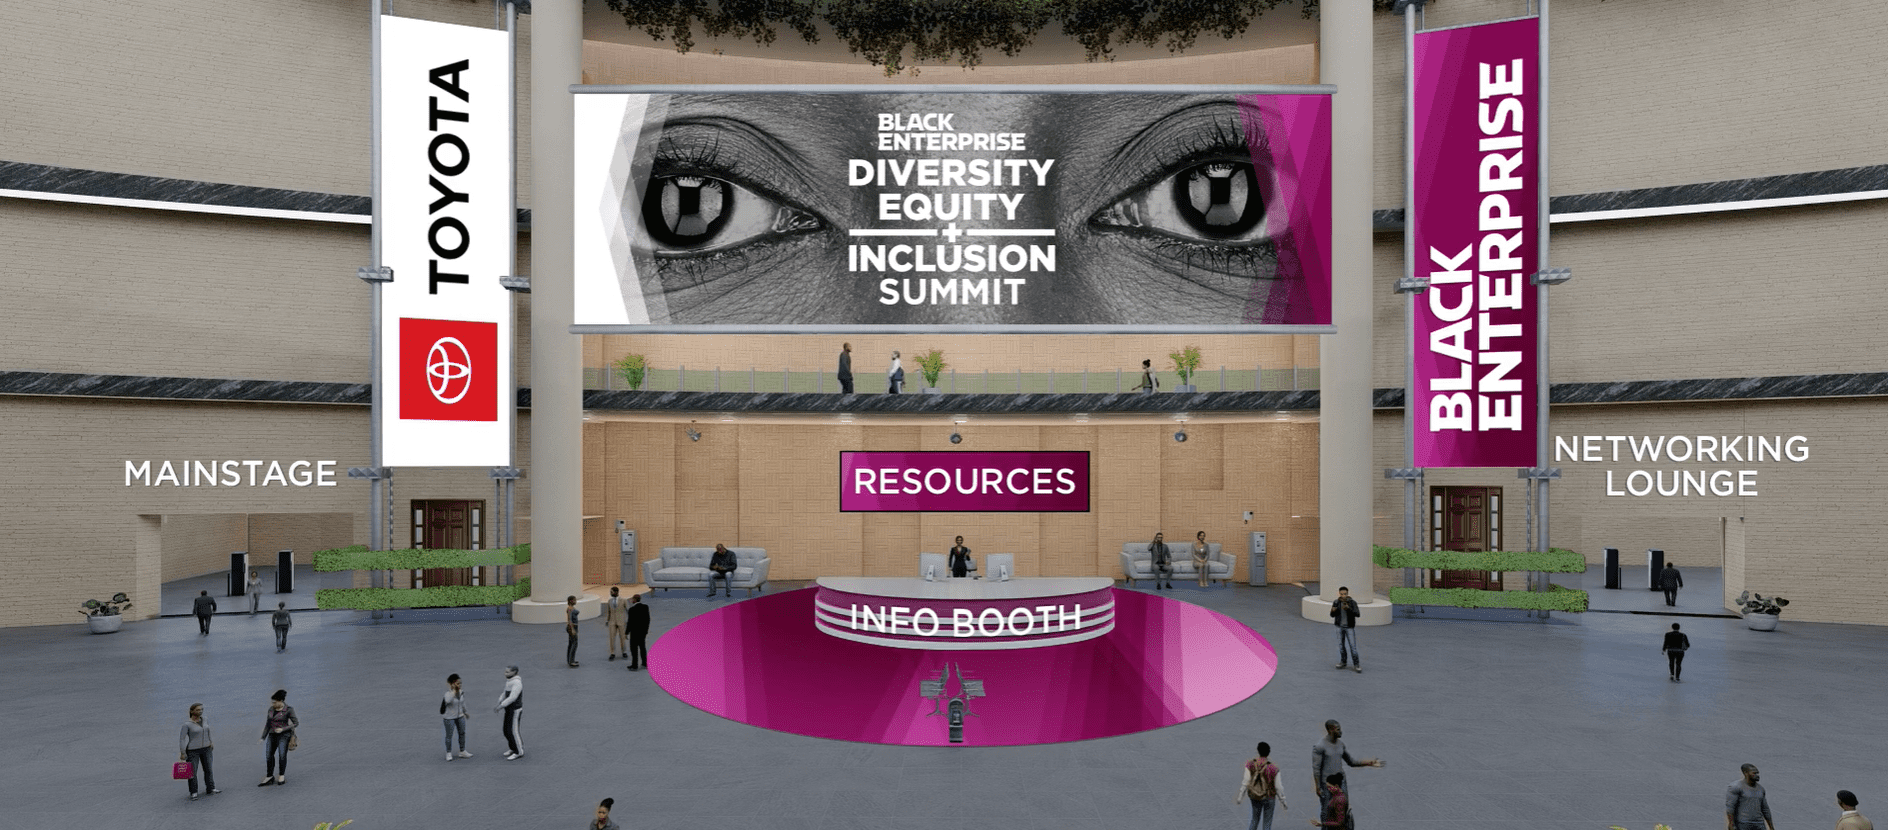 3D lobby of Black Enterprise Diversity, Equity & Inclusion Summit